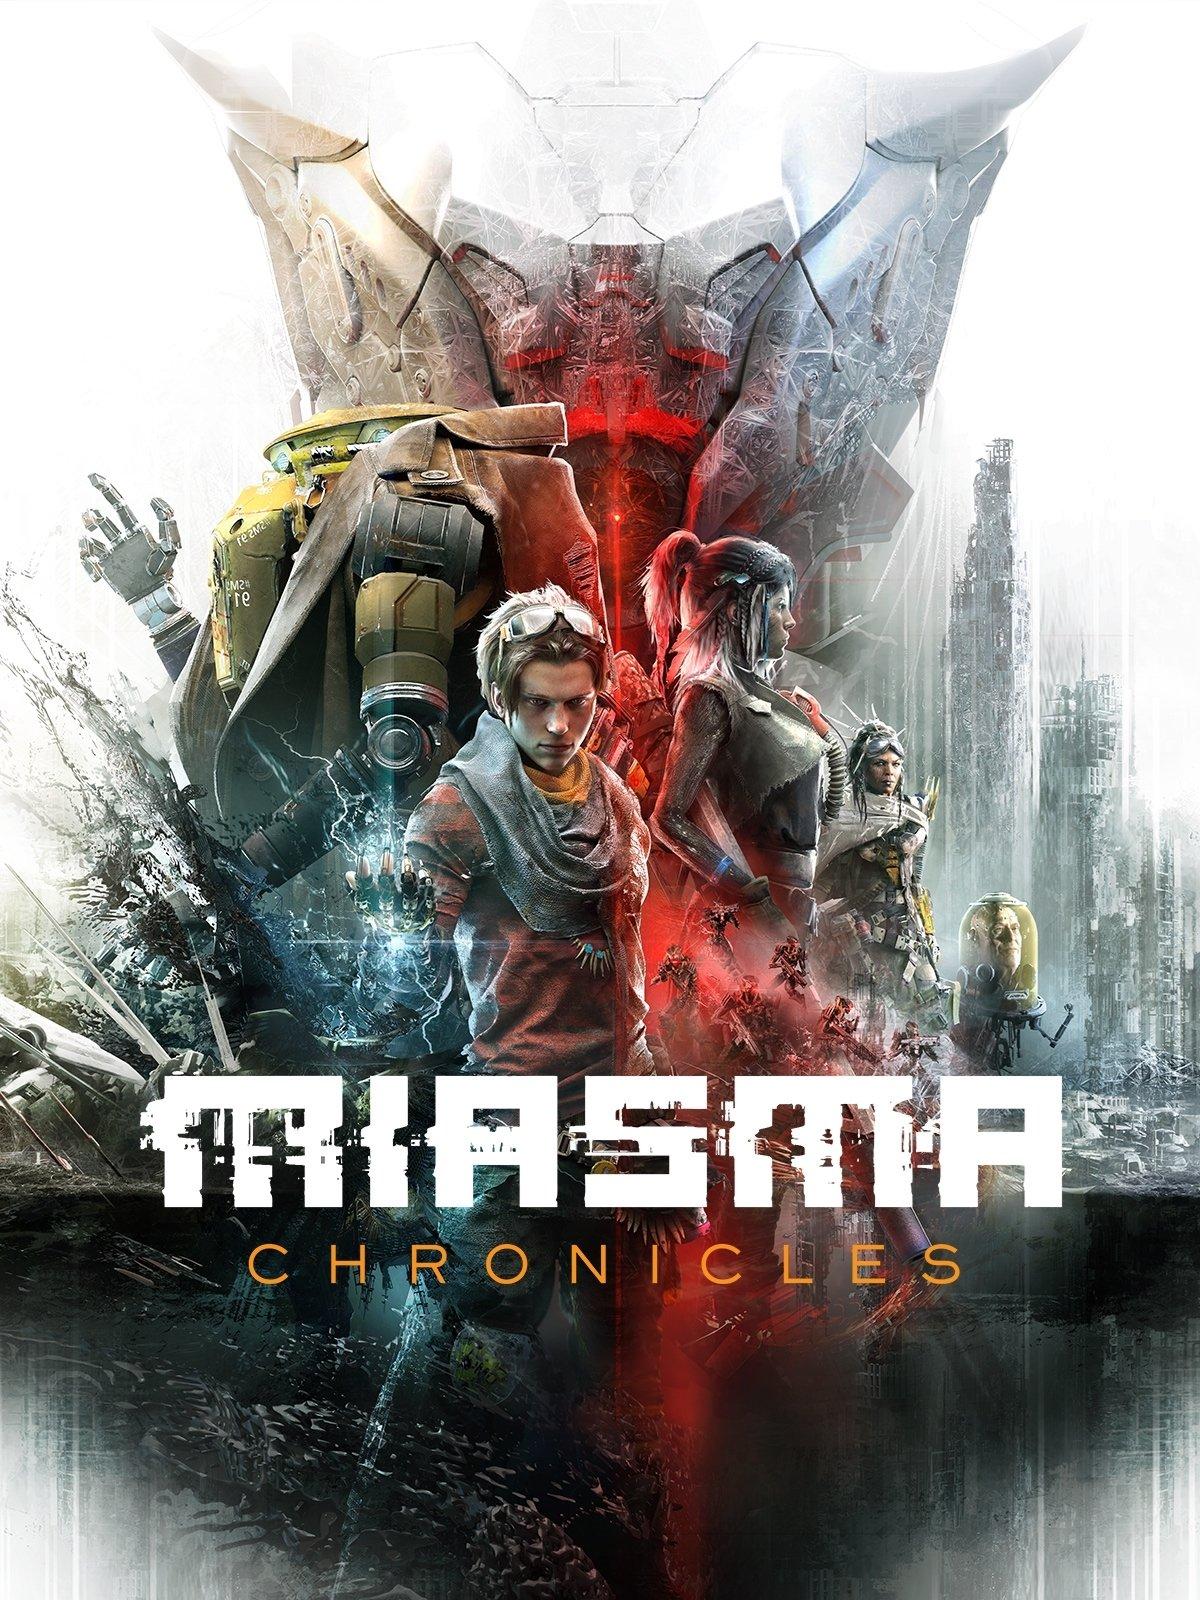 Miasma Chronicles | ROW (Jan 2022) (e3b4cdd9-9b22-41f4-b137-ccf46a82415f)